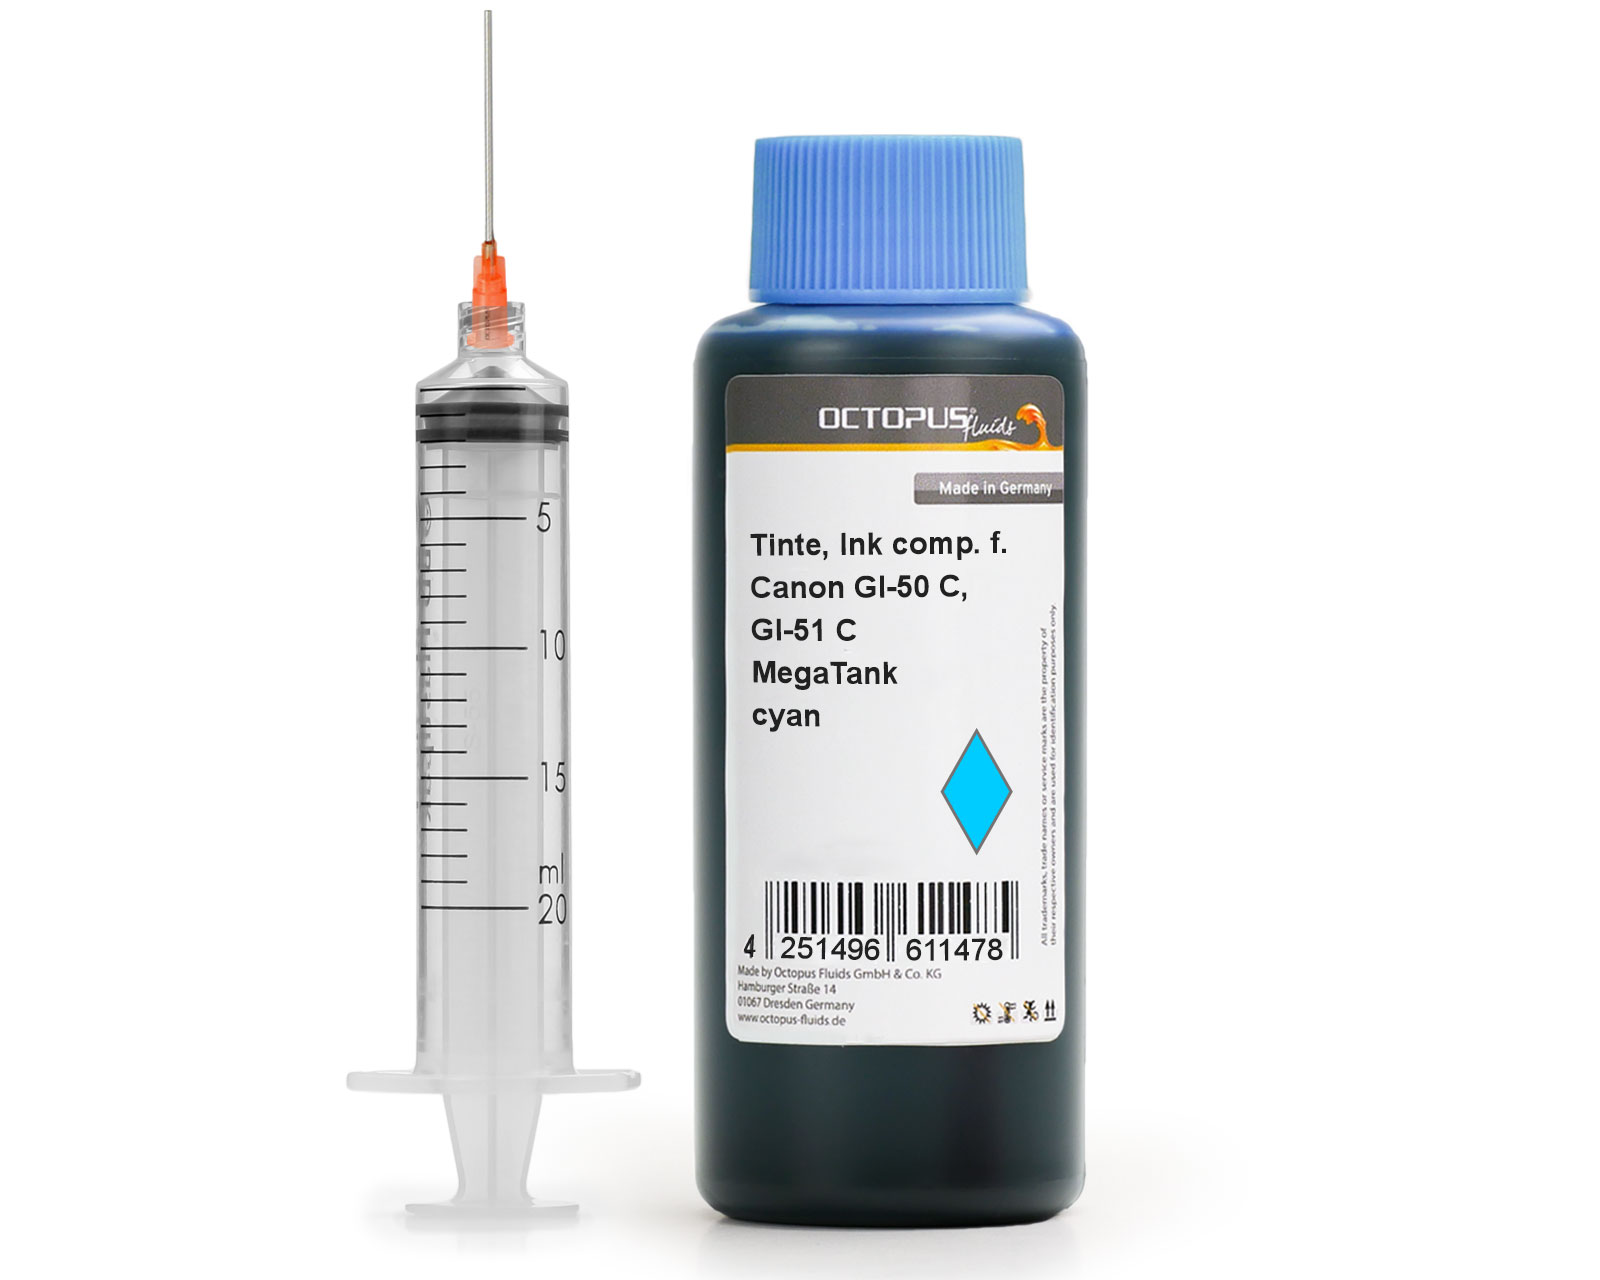 
Refill ink for Canon GI-50 C, GI-51 C Pixma MegaTank cyan with syringe